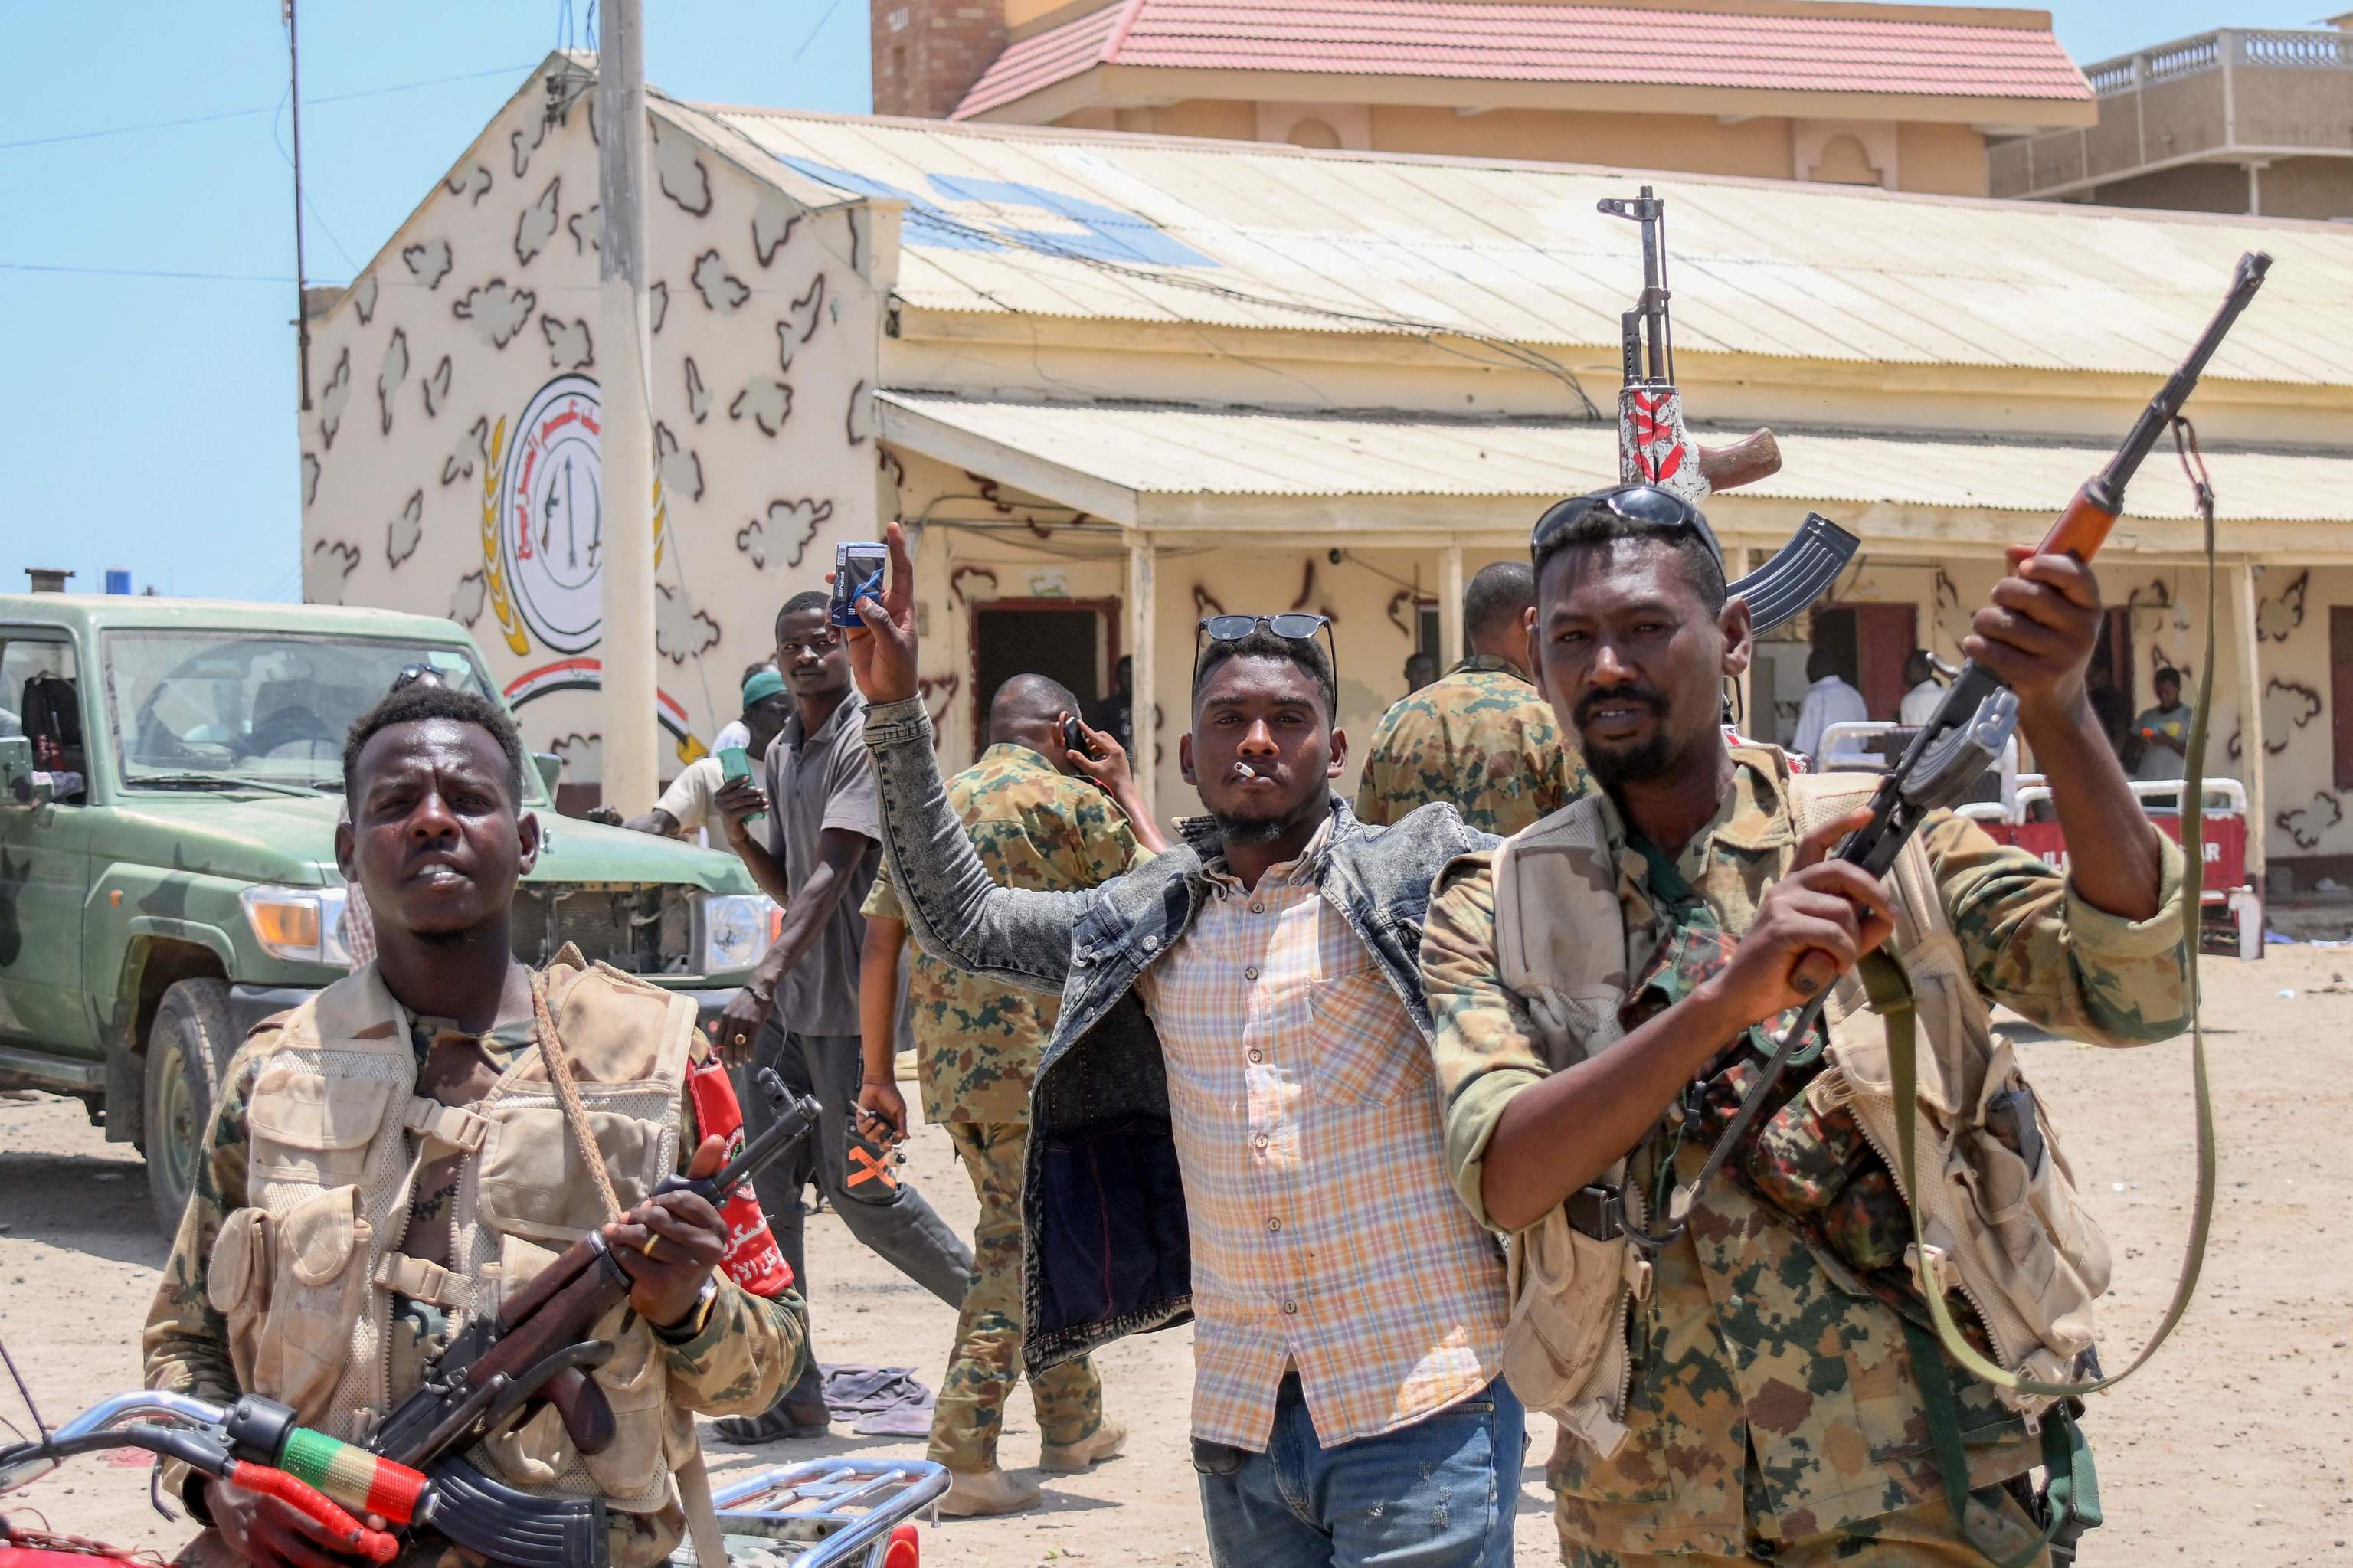 Sudán del Sur se encamina hacia la guerra civil - Página 2 F2YX7VQ4SZF45ADH2XQWFXIA5A